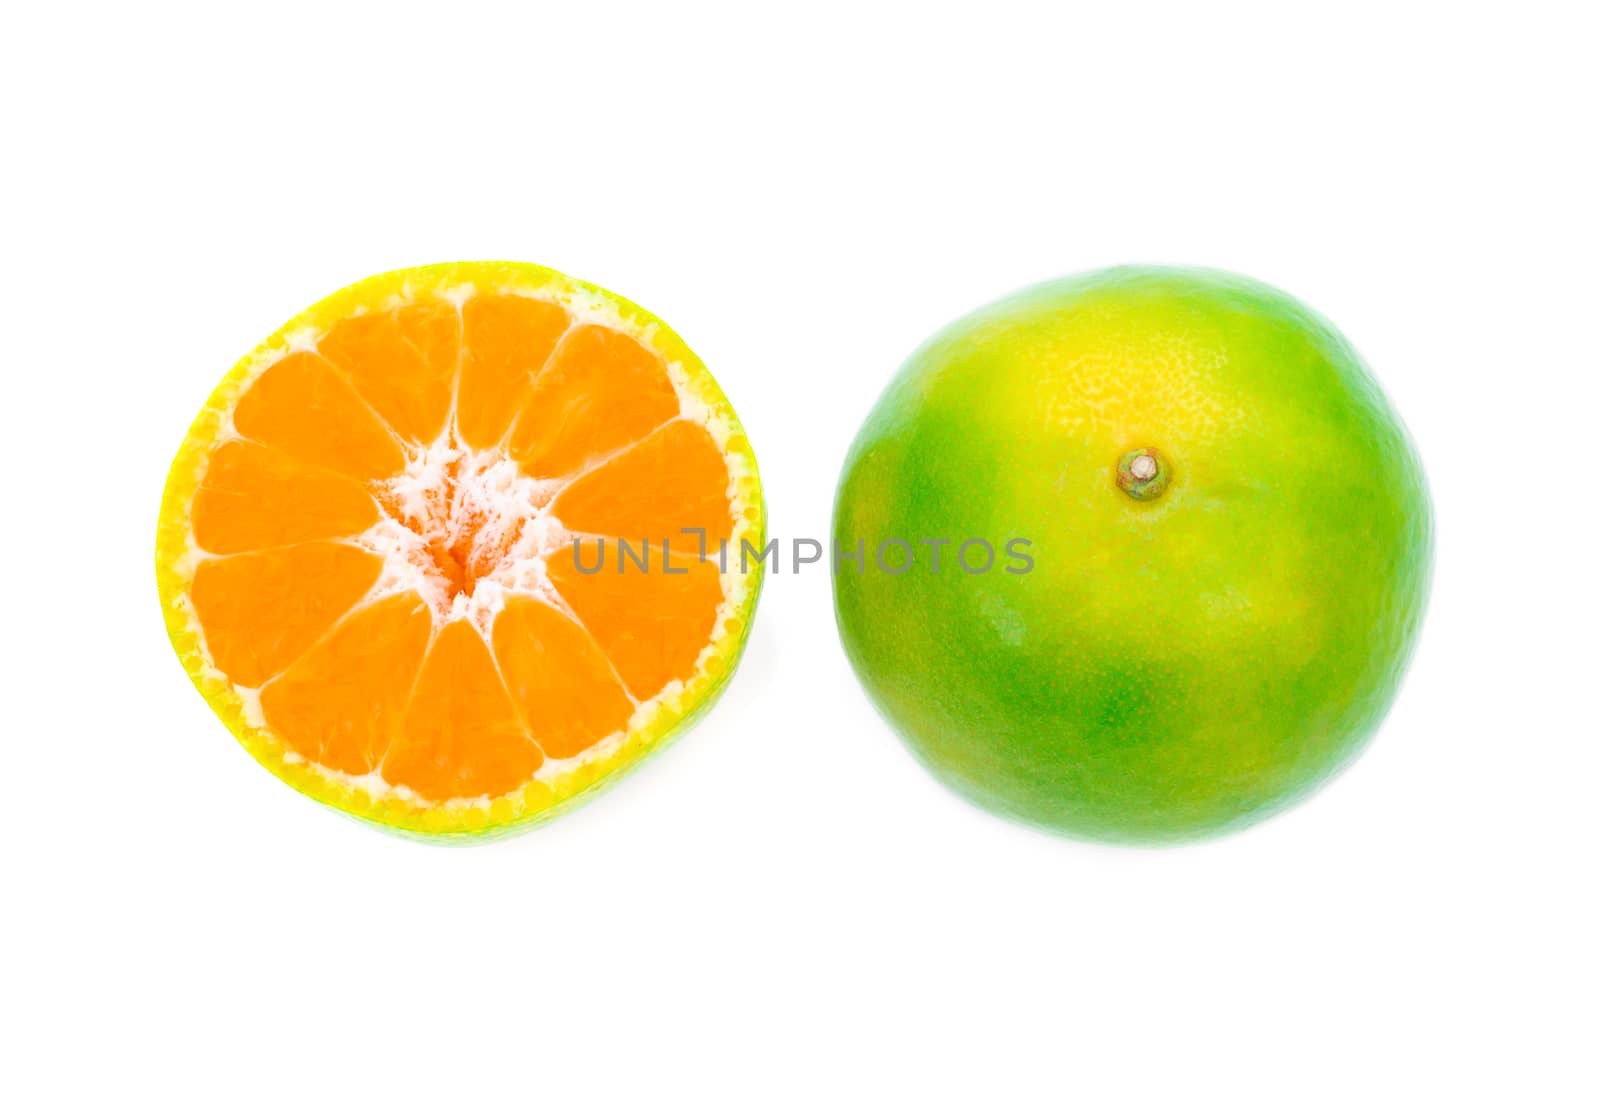 Shogun oranges fruit on a white background